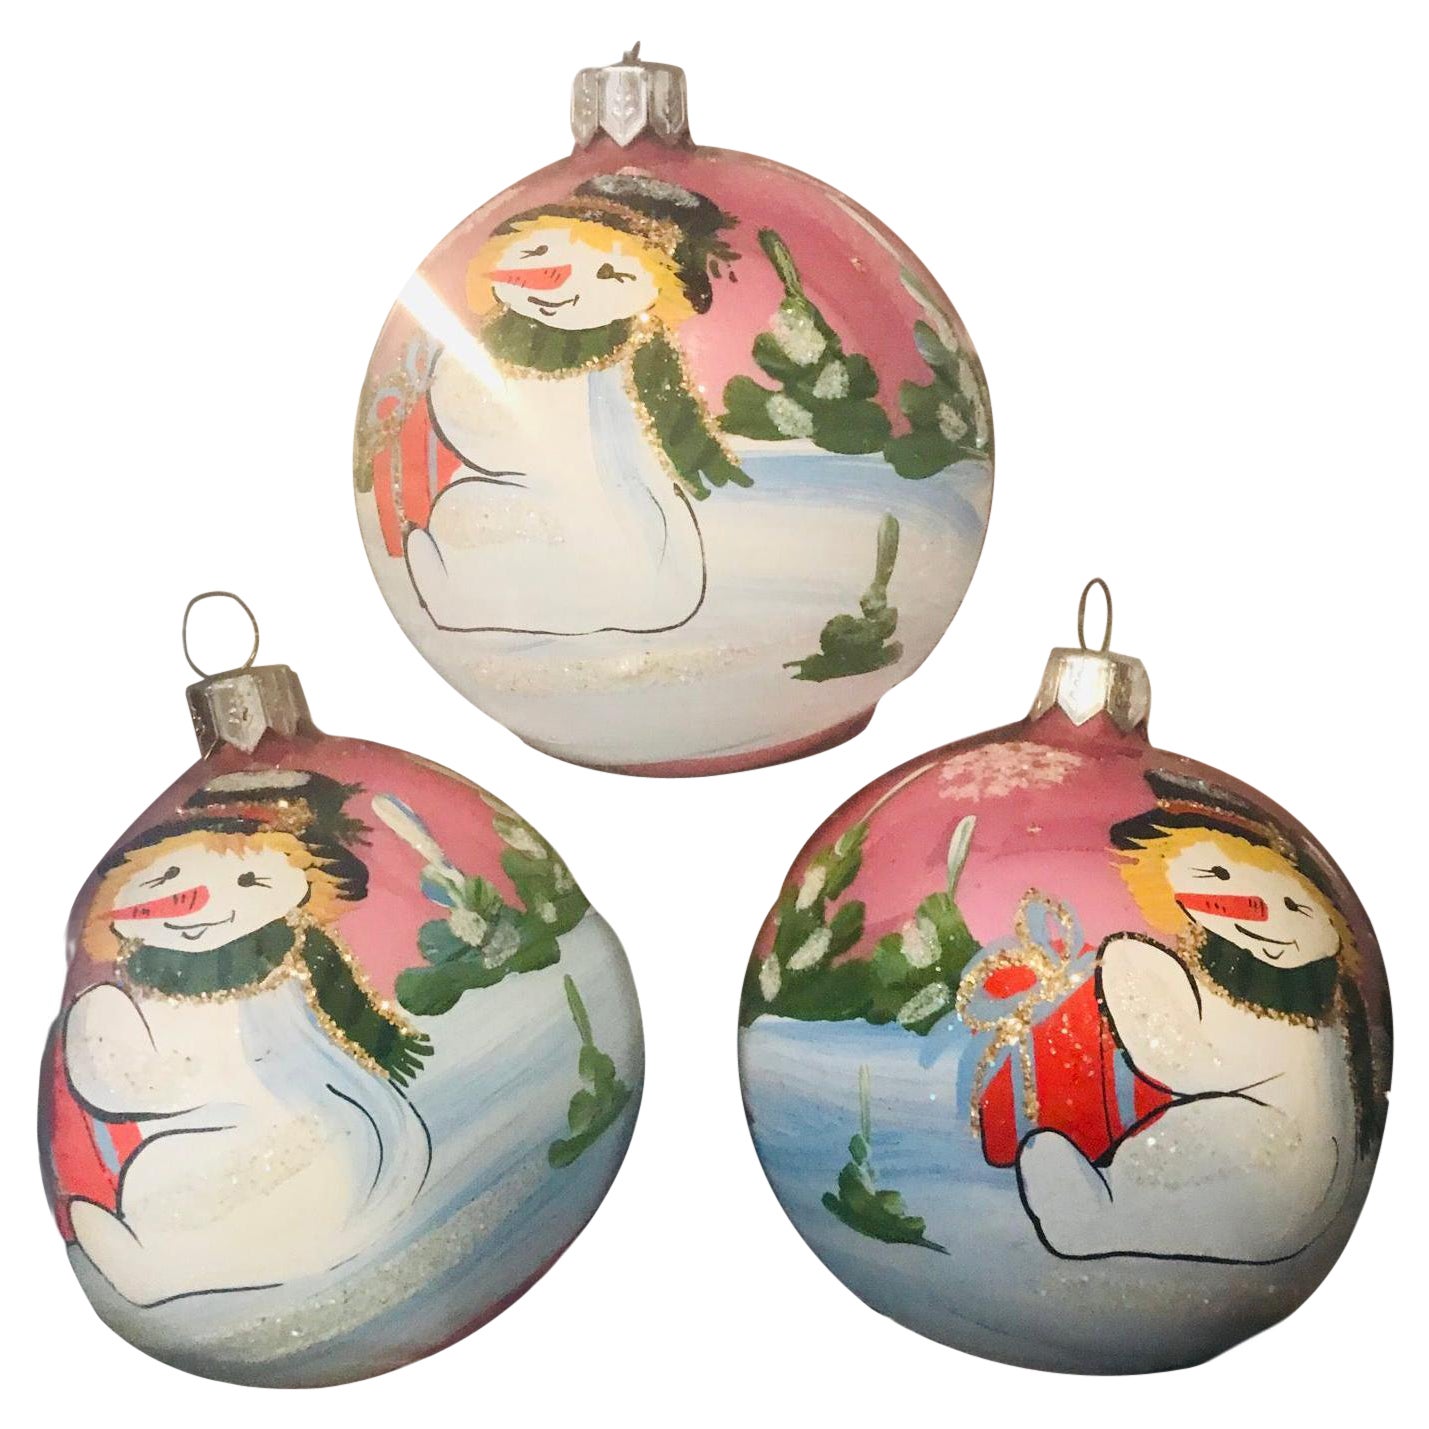 48 Pcs Vntage German Christmas Ornaments Balls For Sale